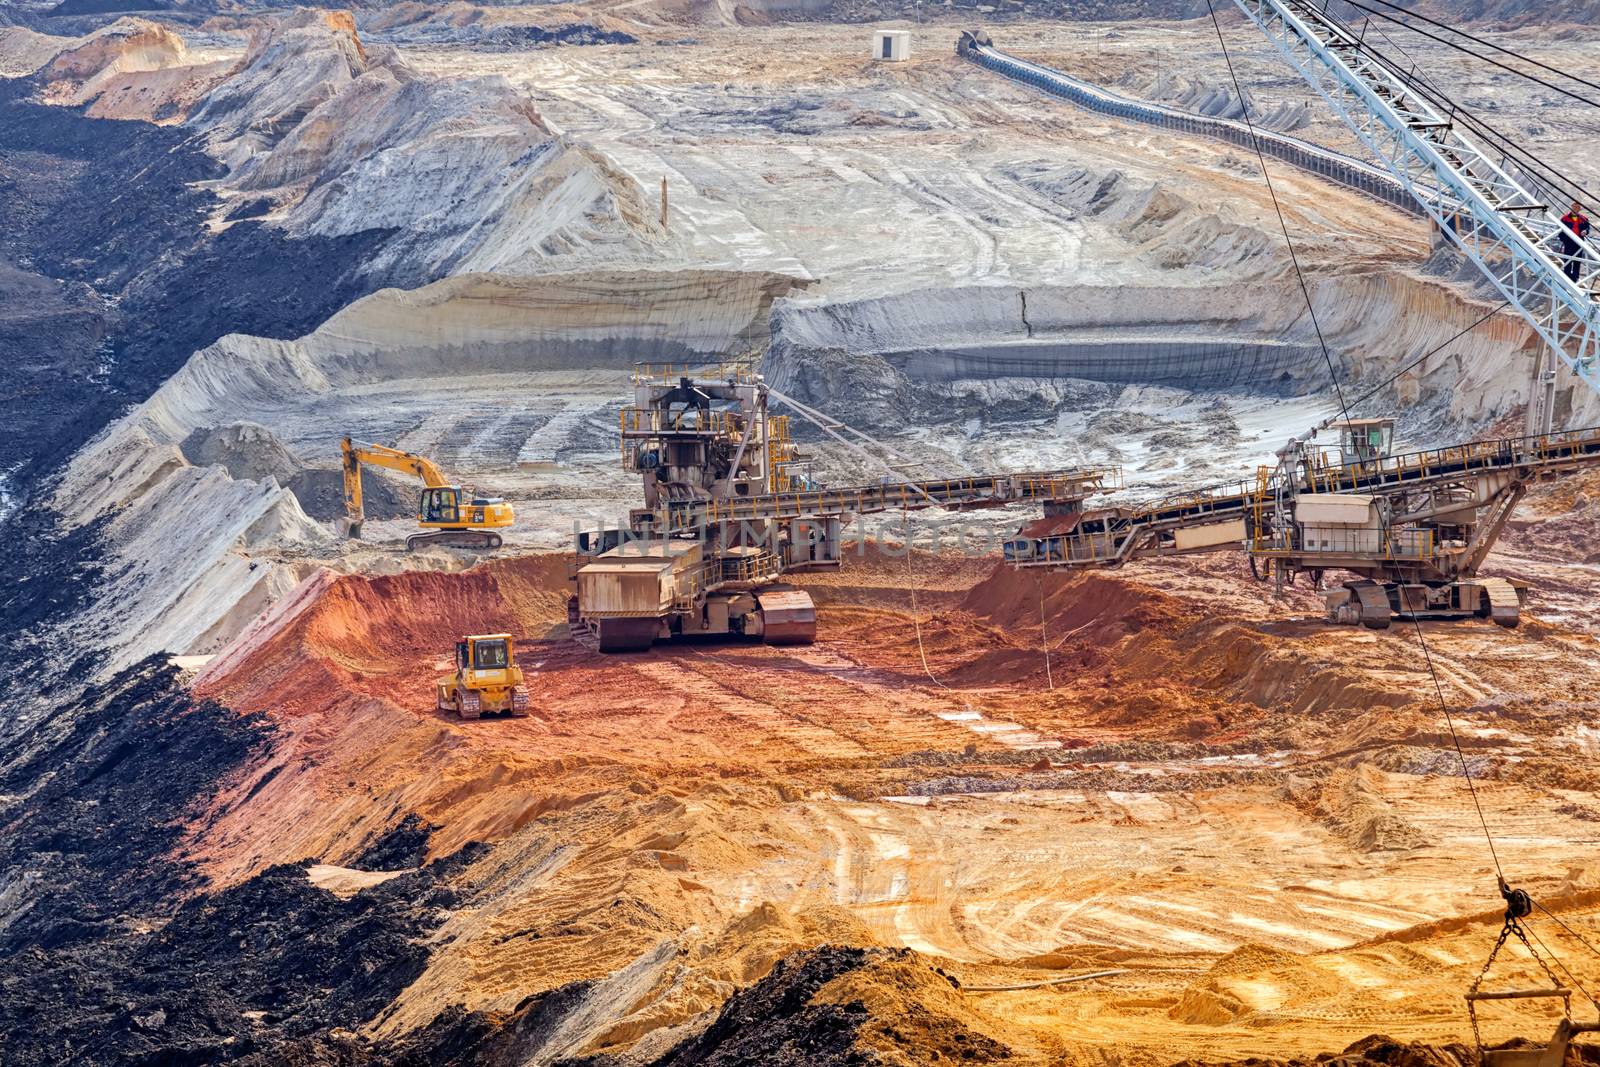 open mining pit by vladimirnenezic